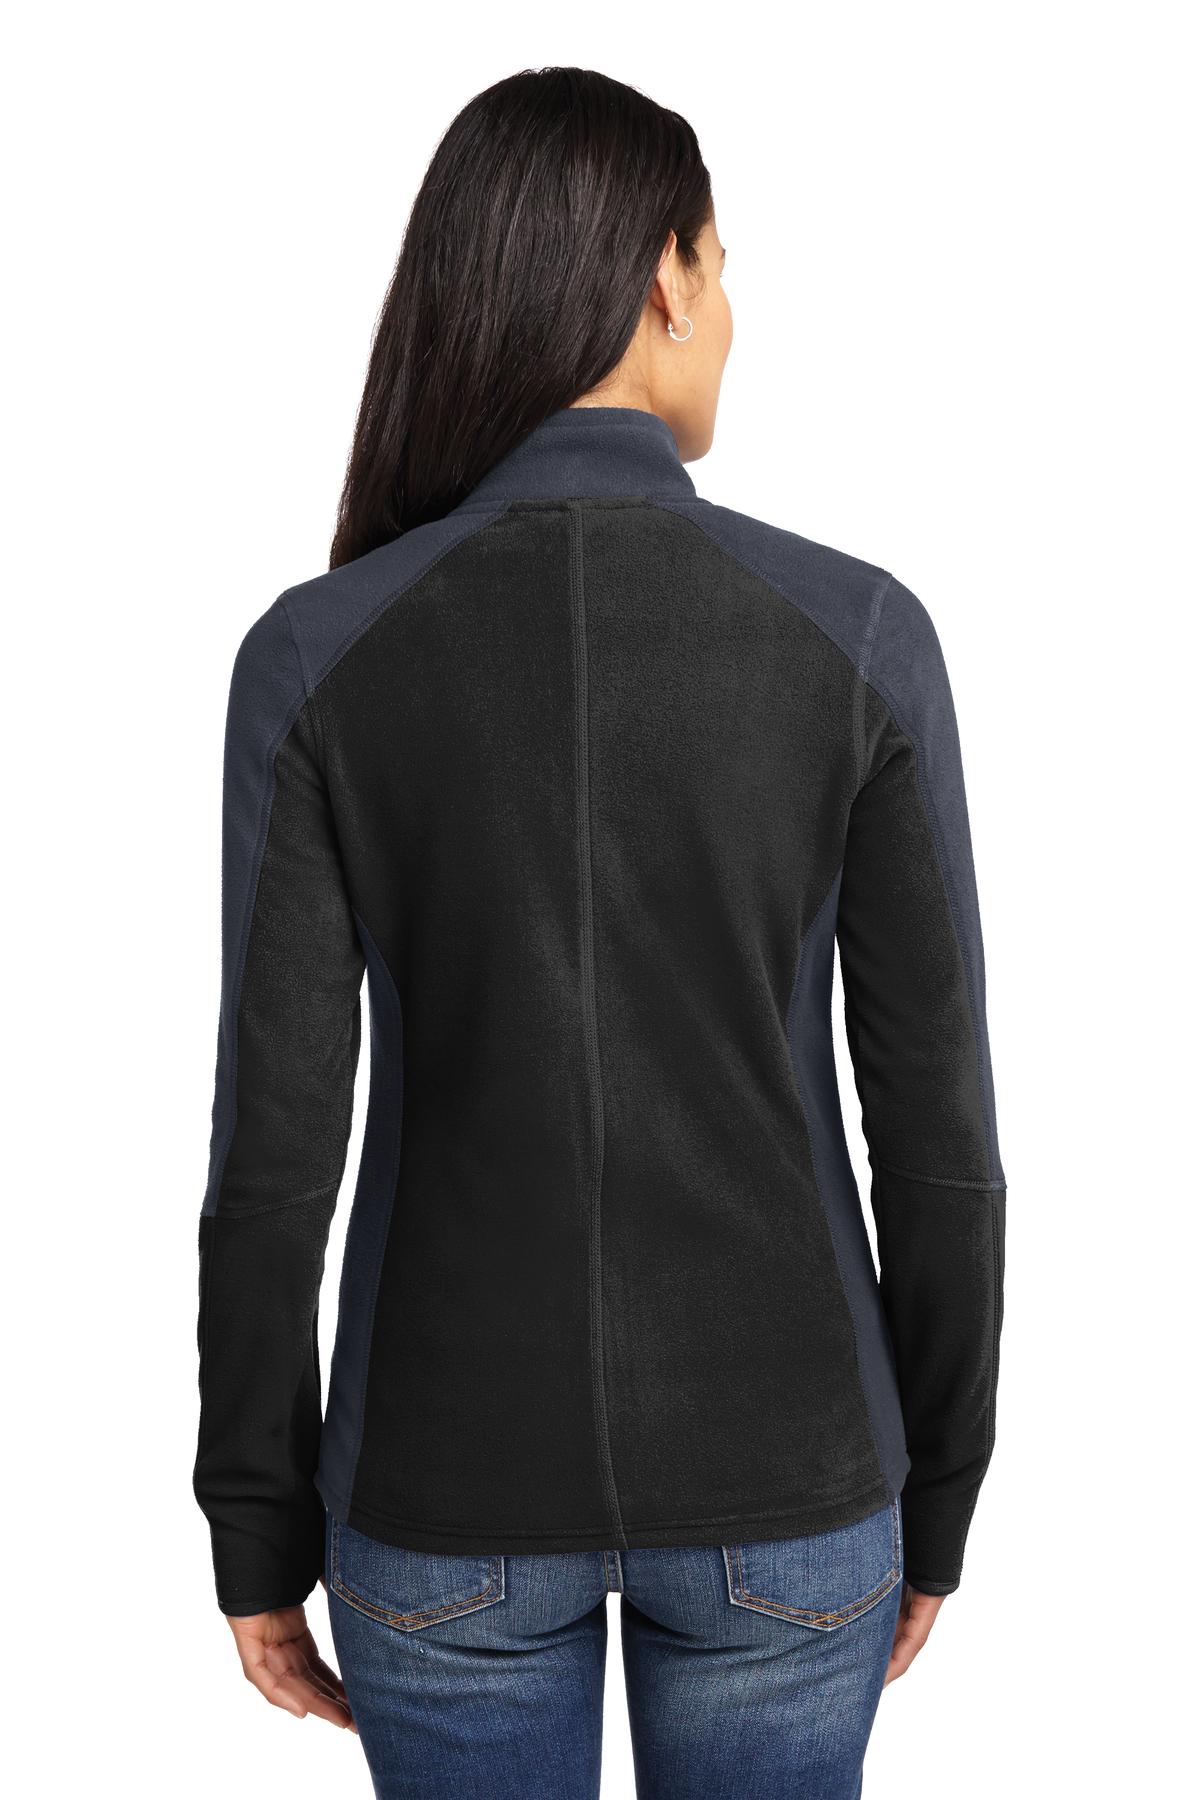 Port Authority® Ladies Colorblock Microfleece Jacket. L230 - DFW Impression